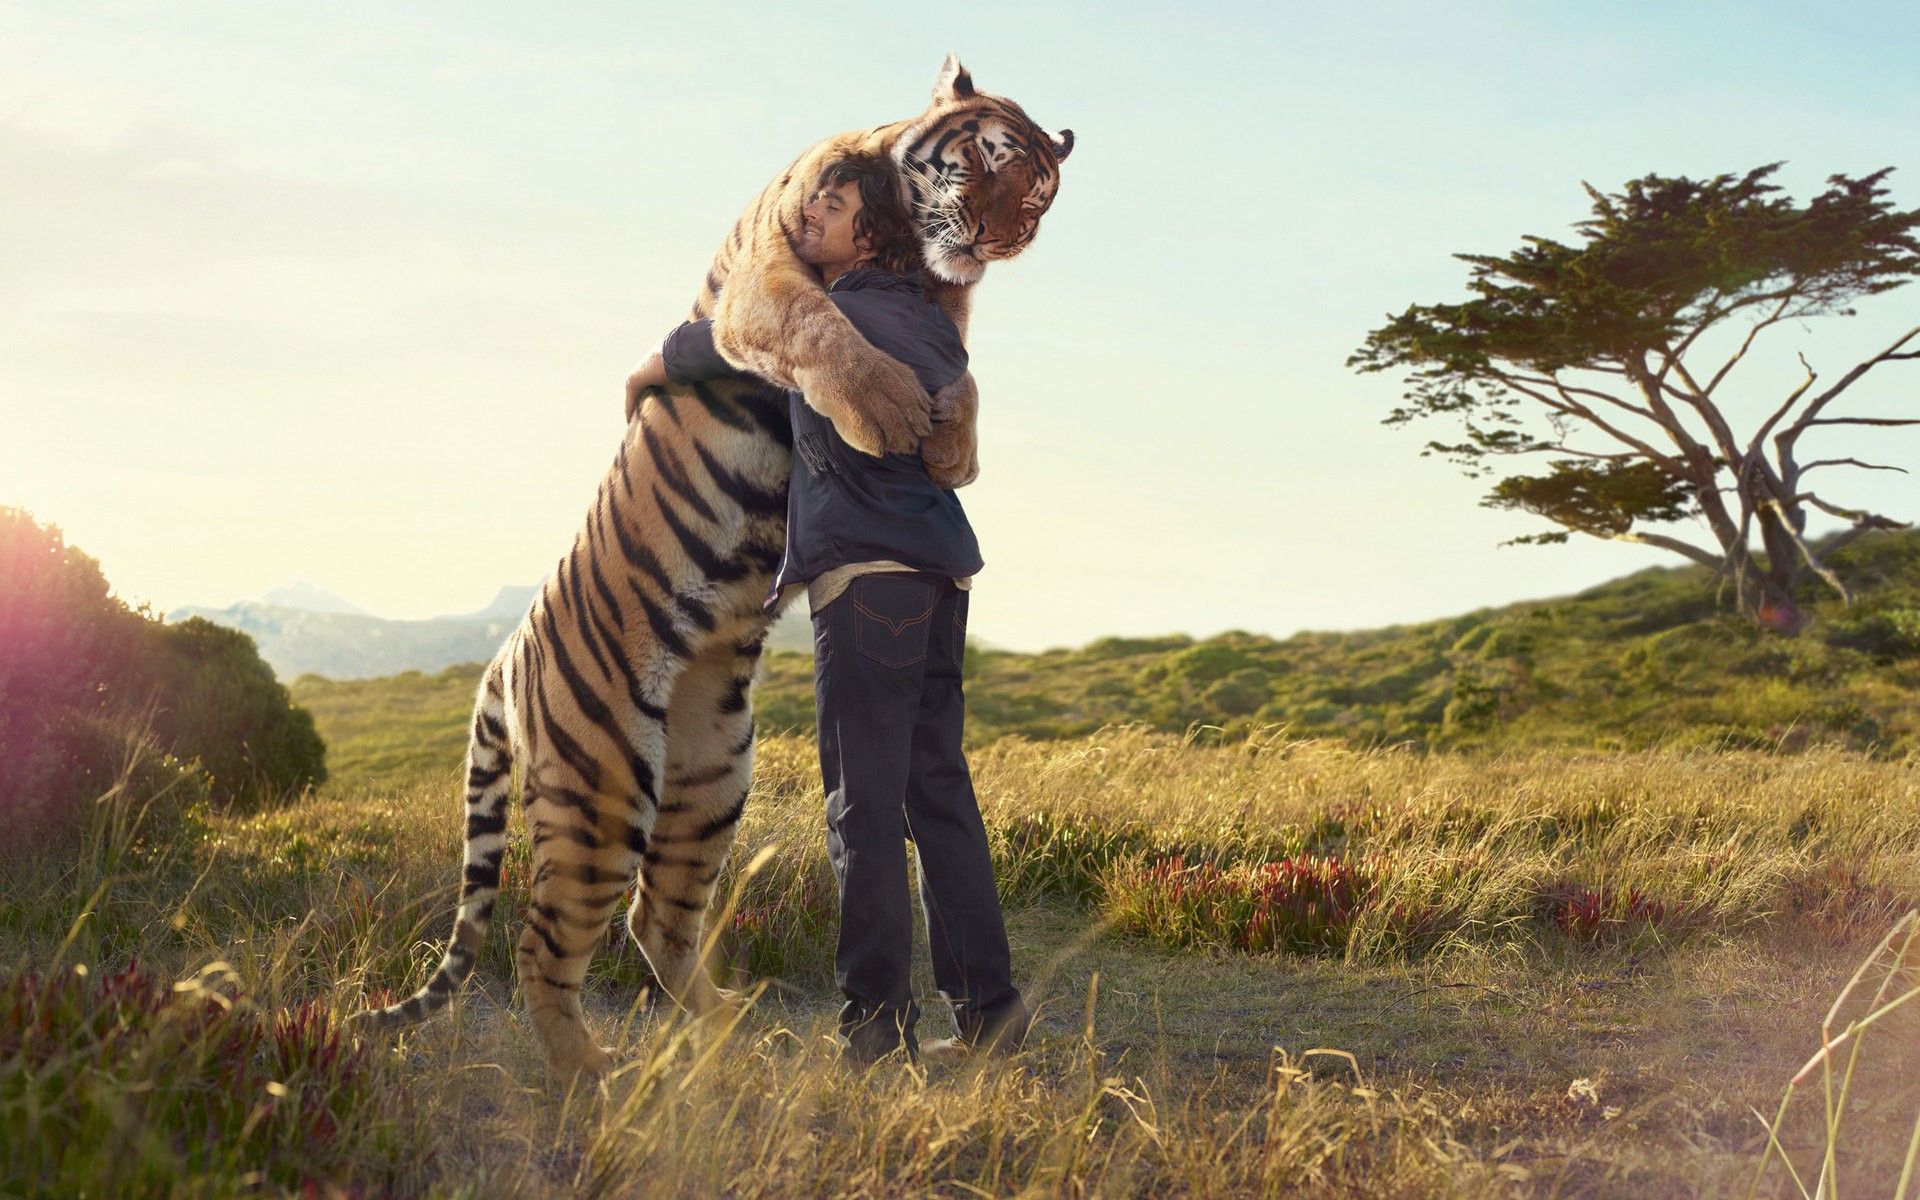 Tiger population is rebounding thanks to human bros.